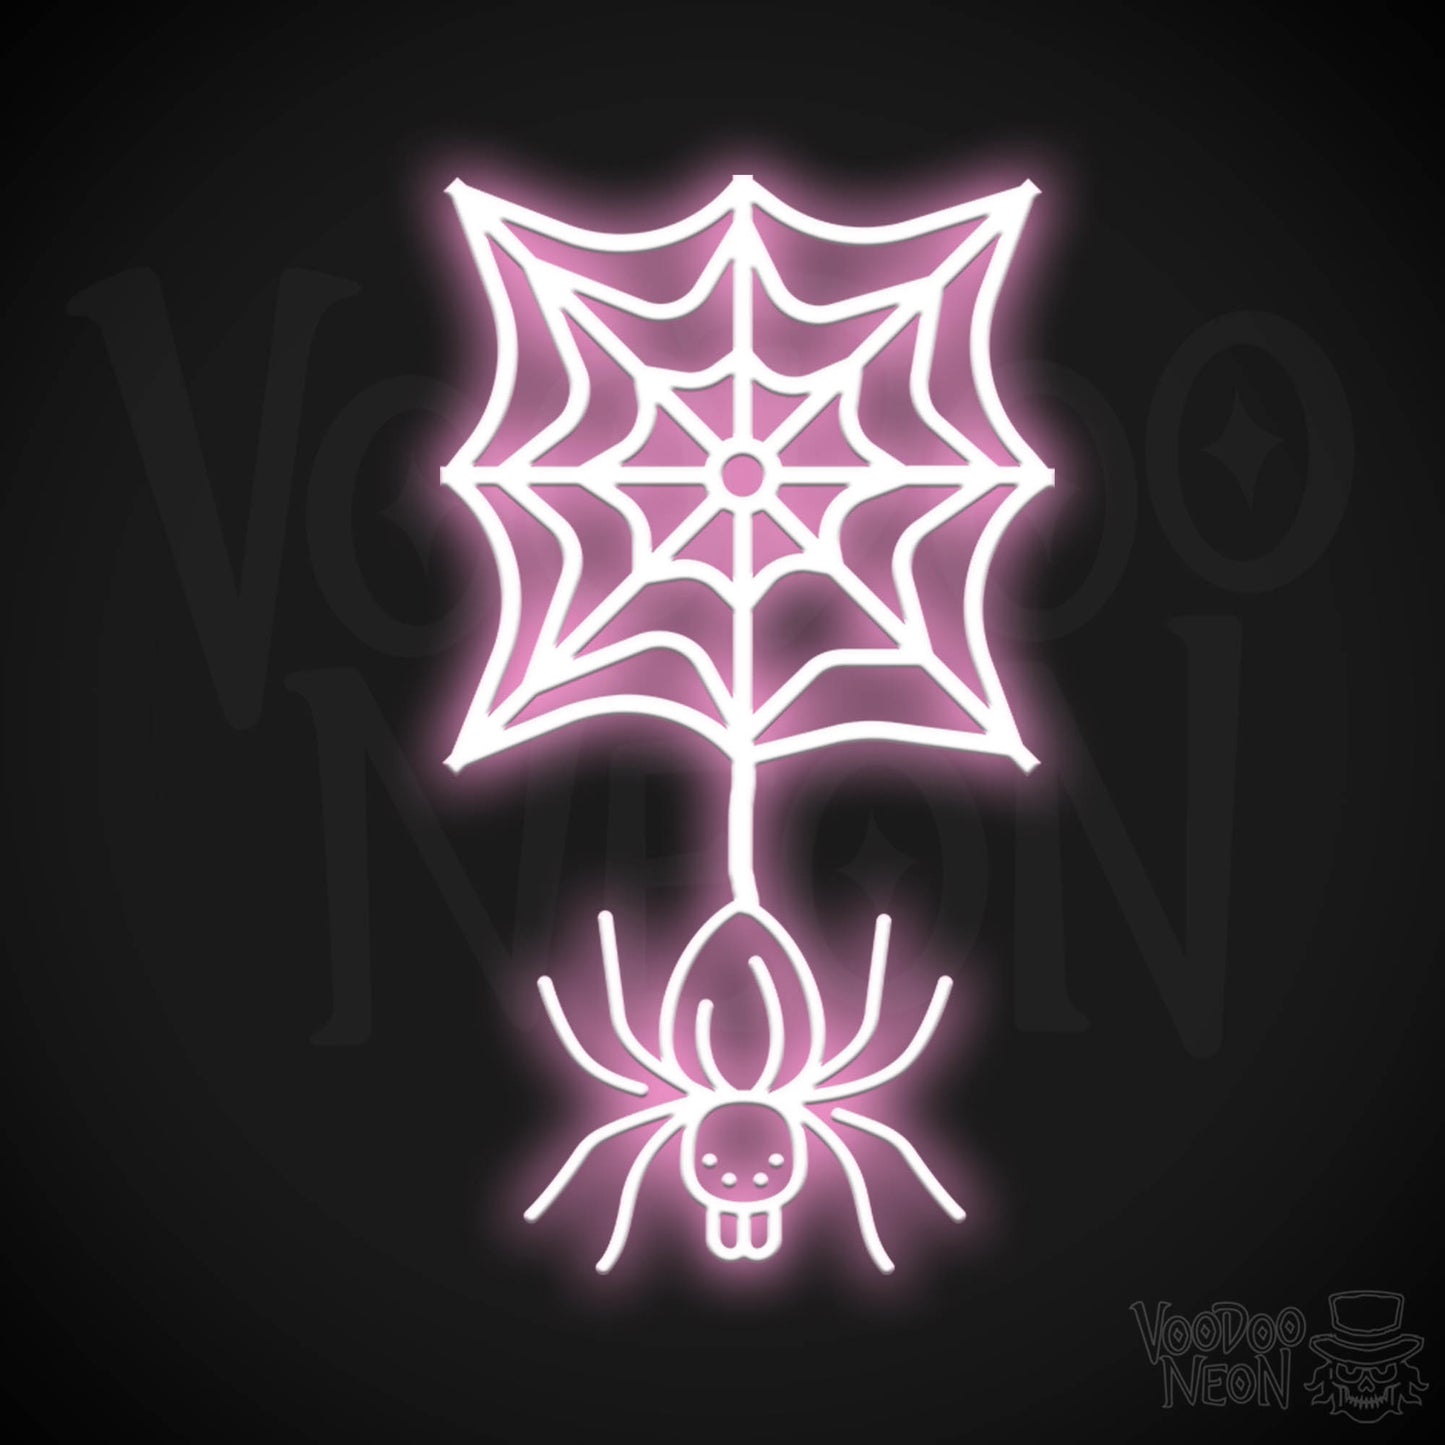 Neon Spider - Spider Neon Sign - Halloween LED Neon Spider - Color Light Pink